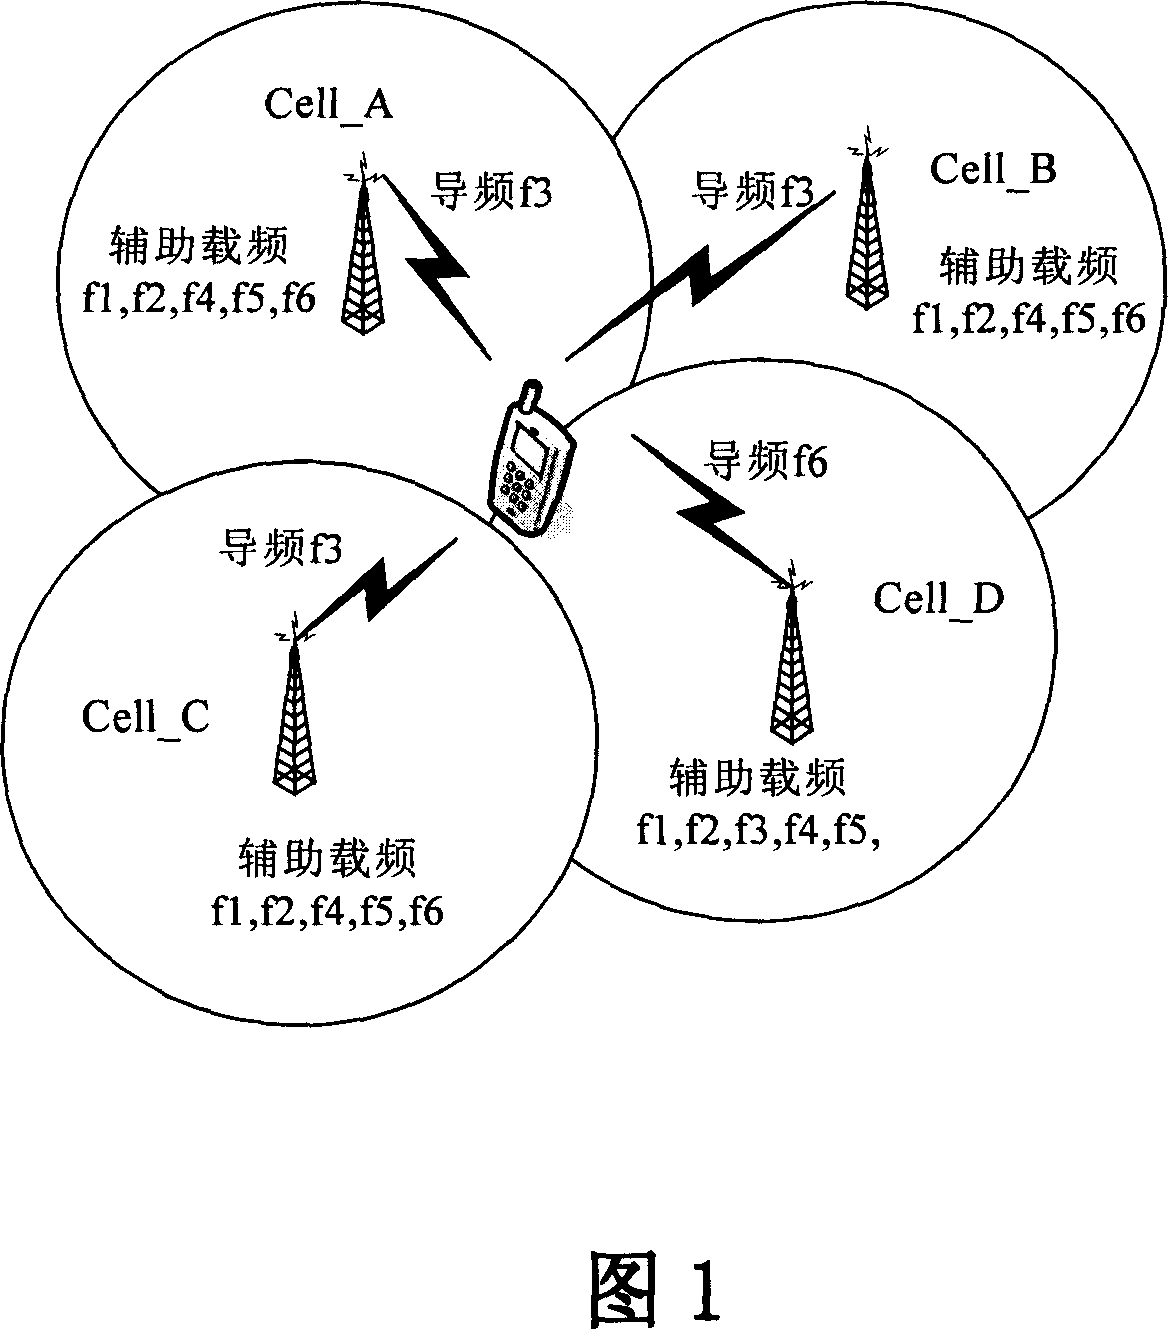 Random access method of multi-carrier covering of TD-SCDMA system